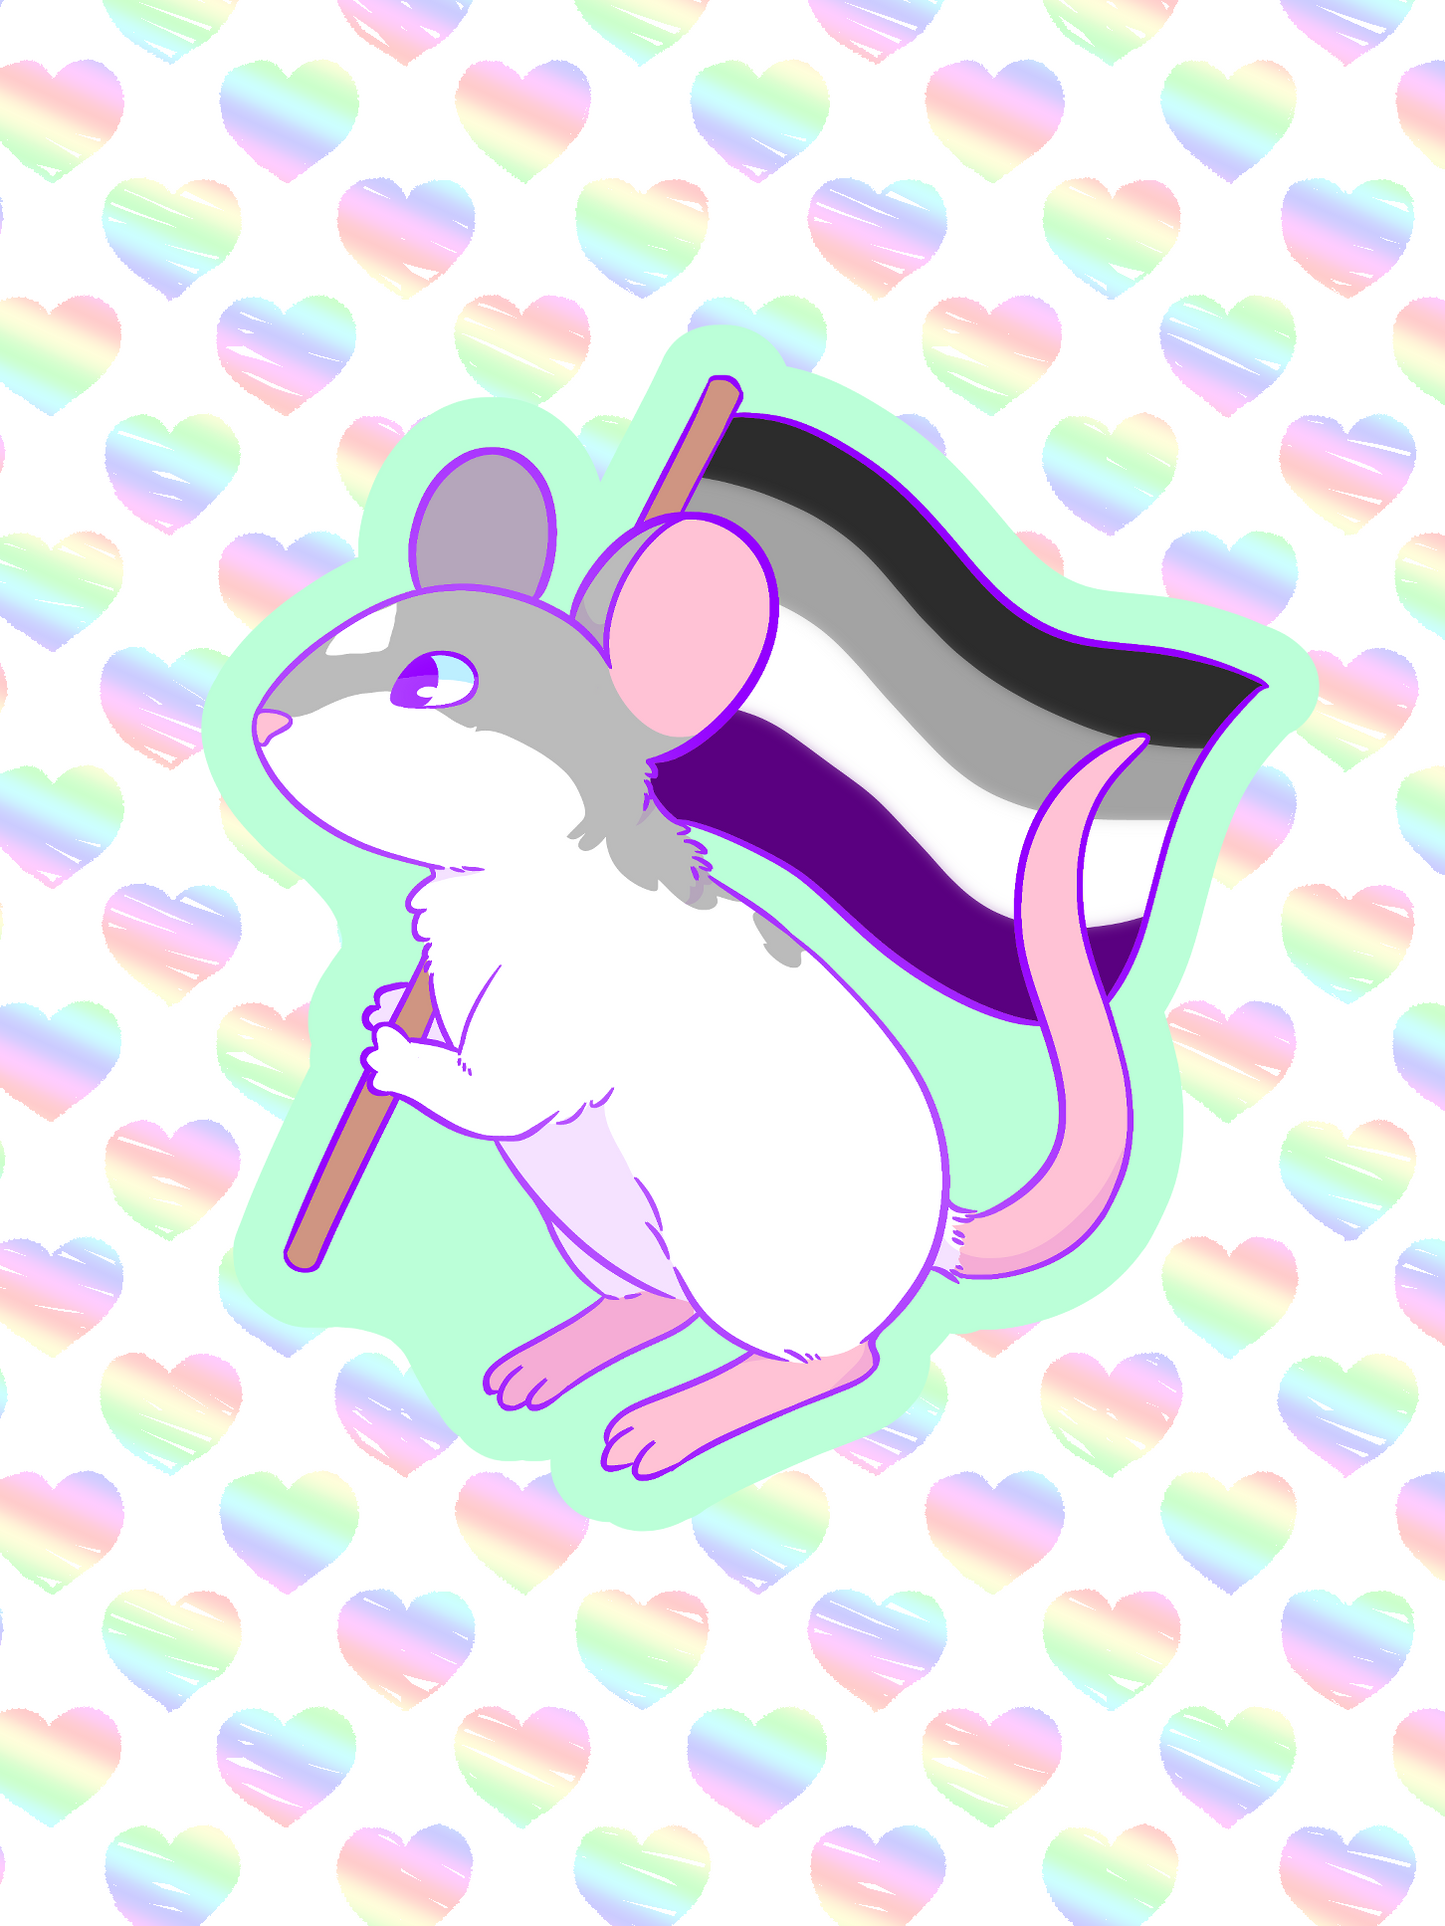 Pride Rats! - Stickers